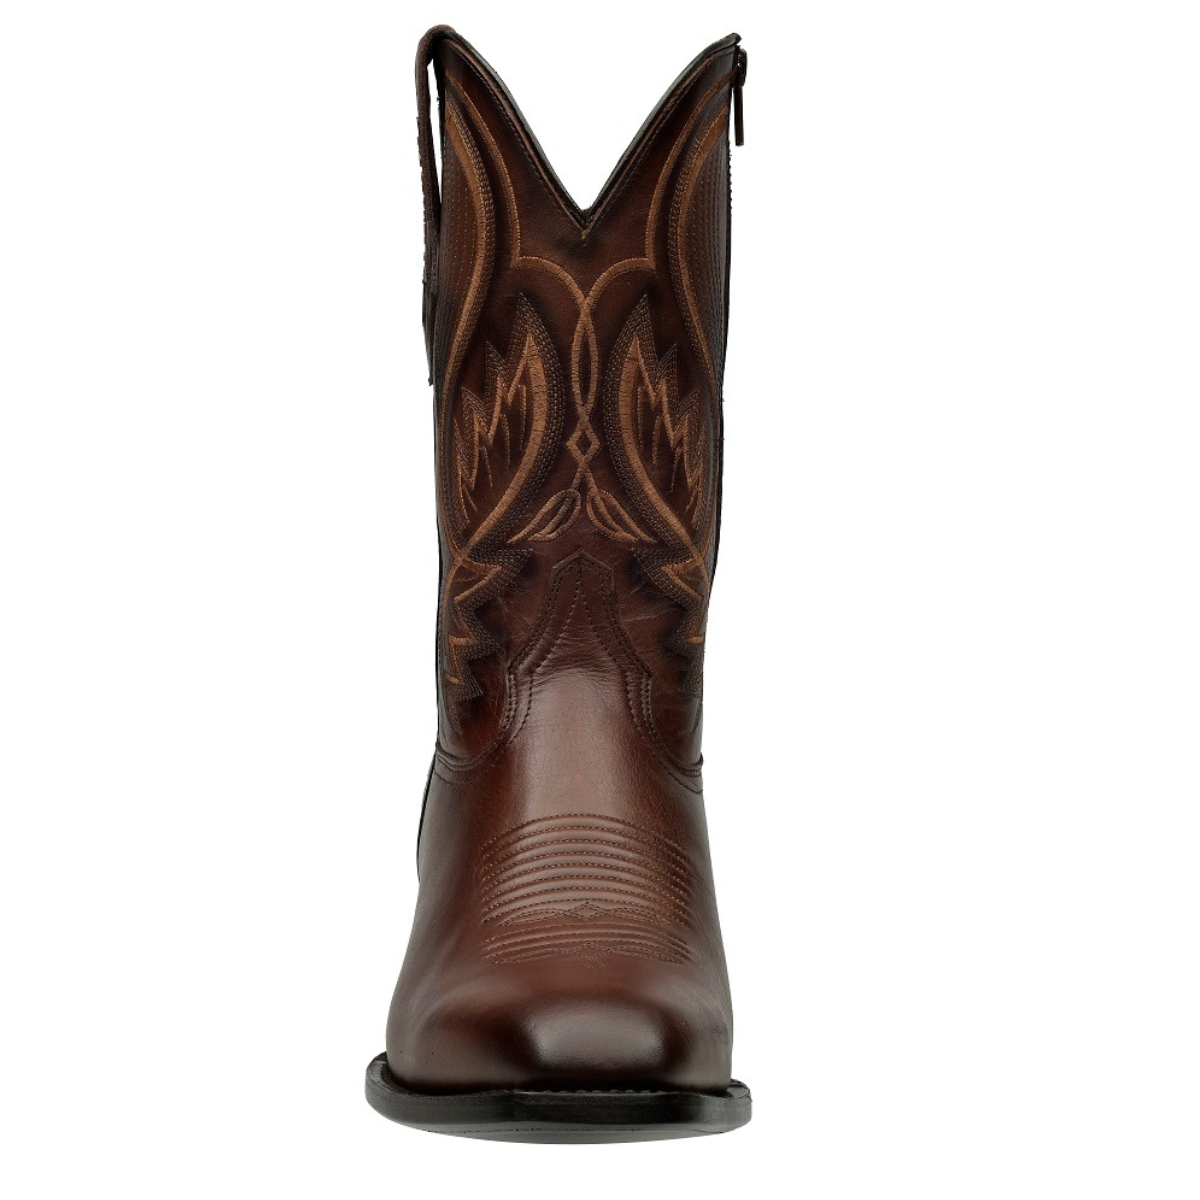 Rio Grande Men's Casual Oval Toe Cowboy Boots with Zipper